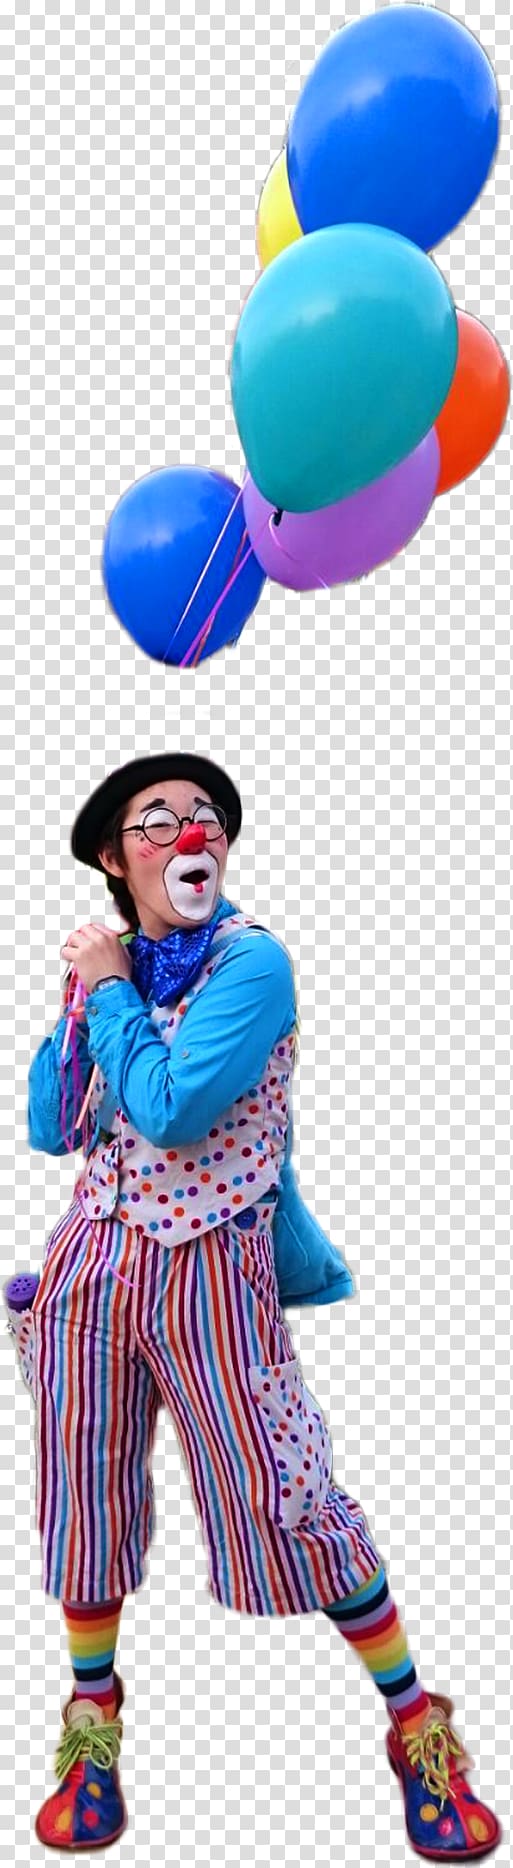 Snowball the Clown Costume Mime artist Allan & Friends' Studios Sdn Bhd (Clowns, Magicians, Ventriloquists), clown transparent background PNG clipart